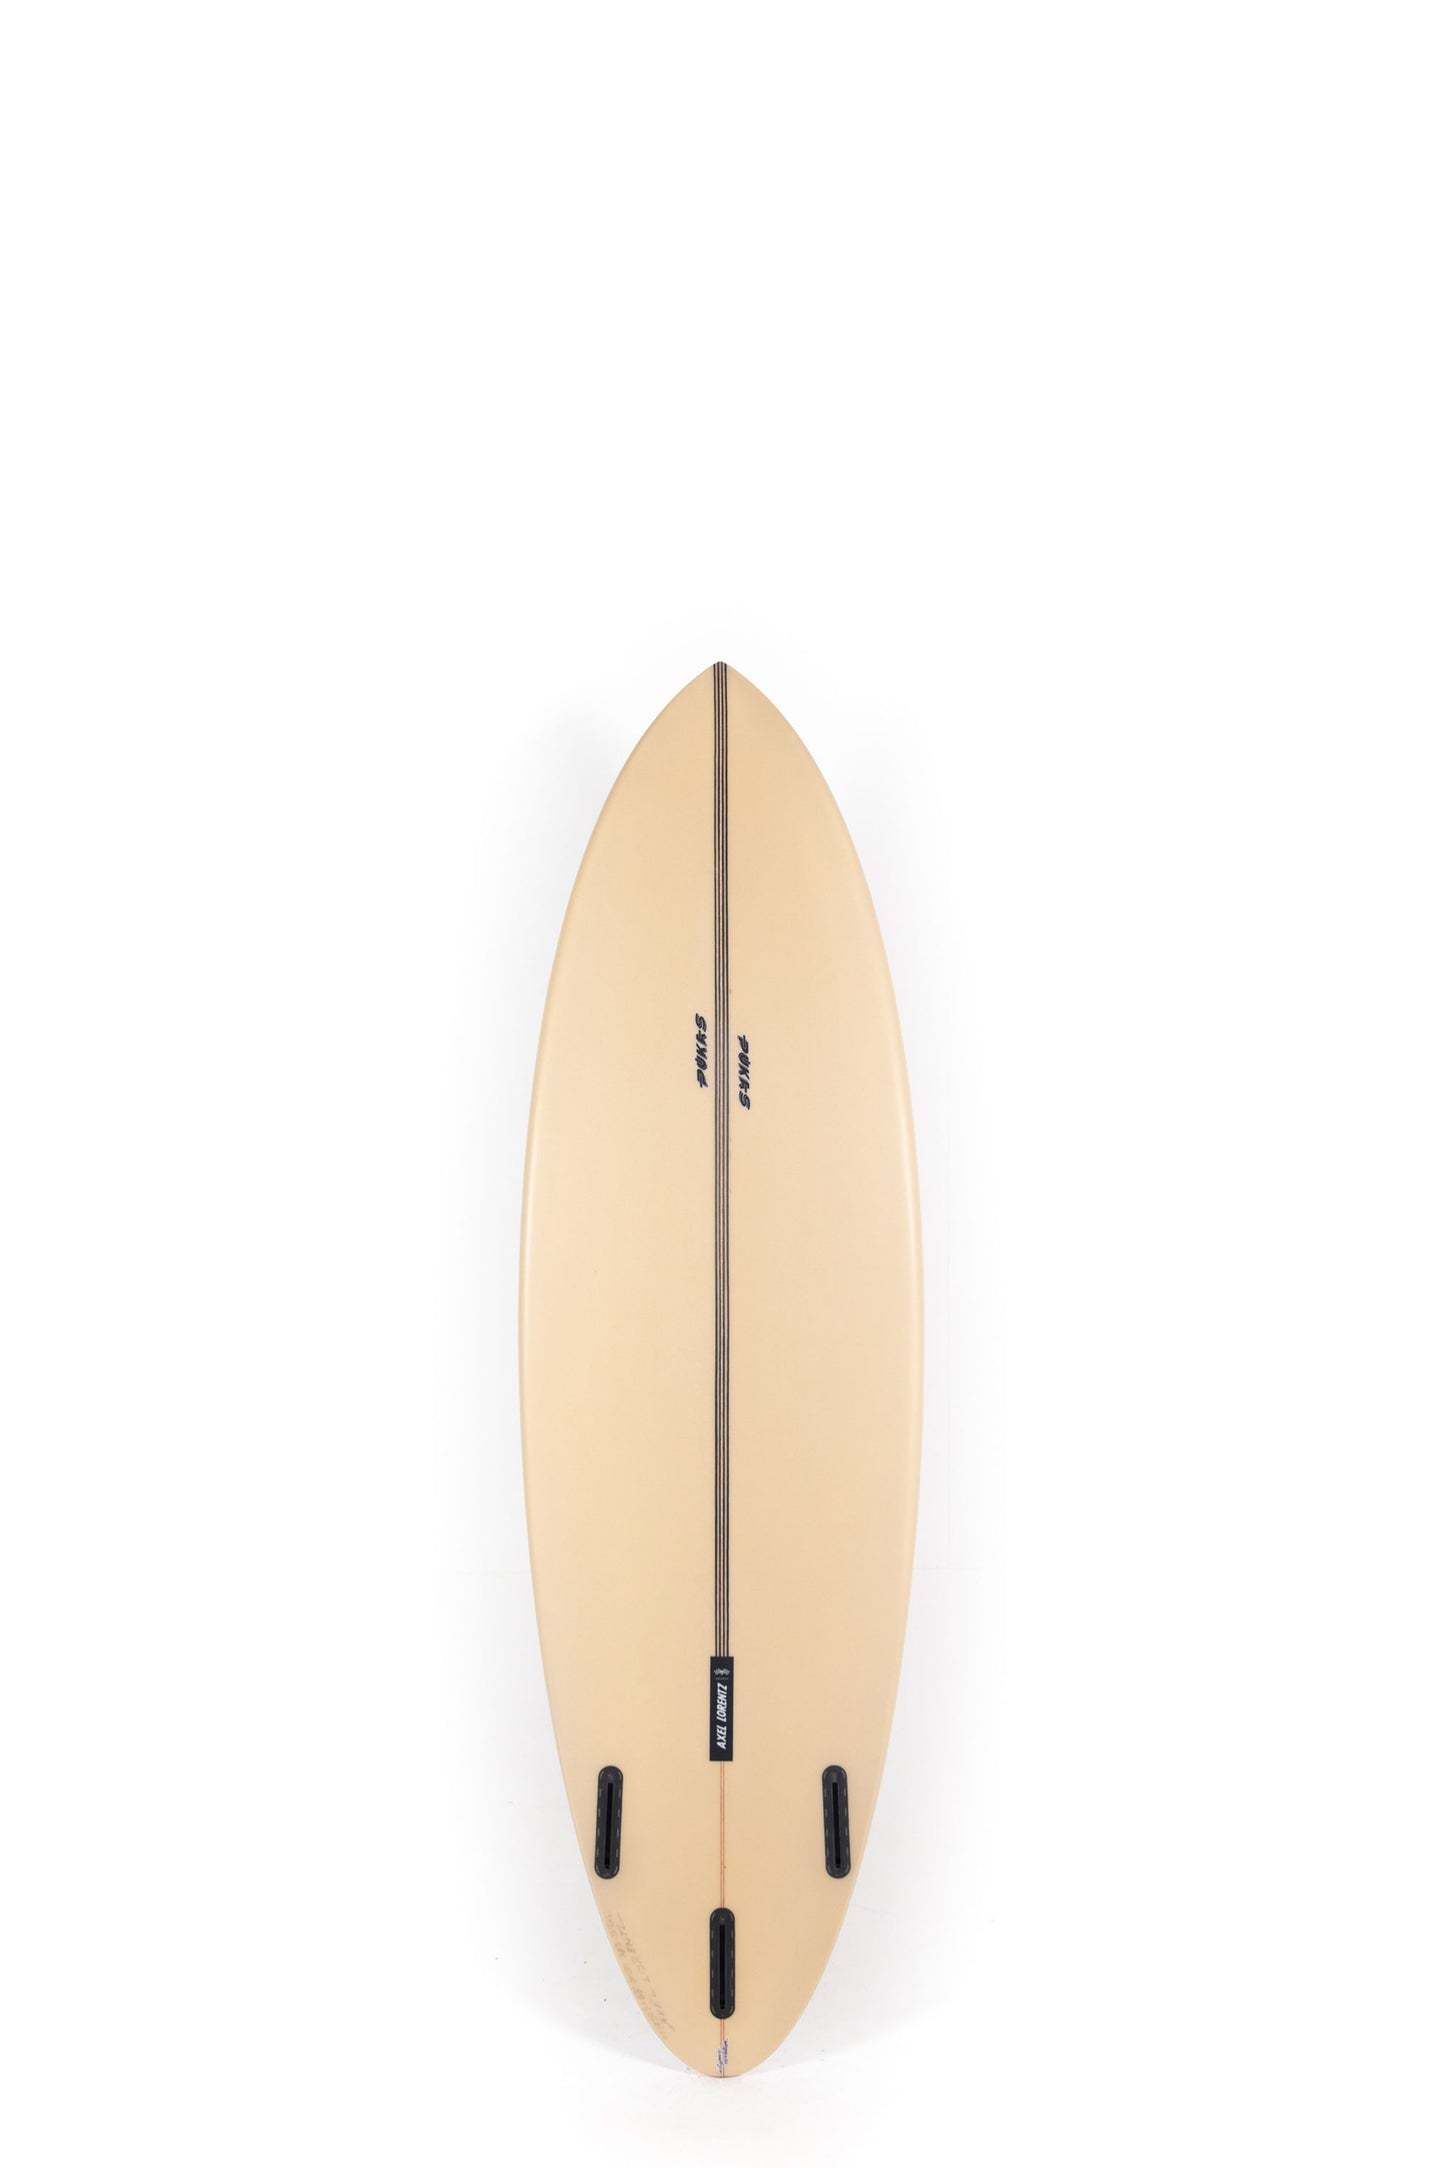 Pukas Surf Shop - Pukas Surfboard - 69ER EVOLUTION by Axel Lorentz- 6’2” x 20,75 x 2.63 - 35,72L - AX10503